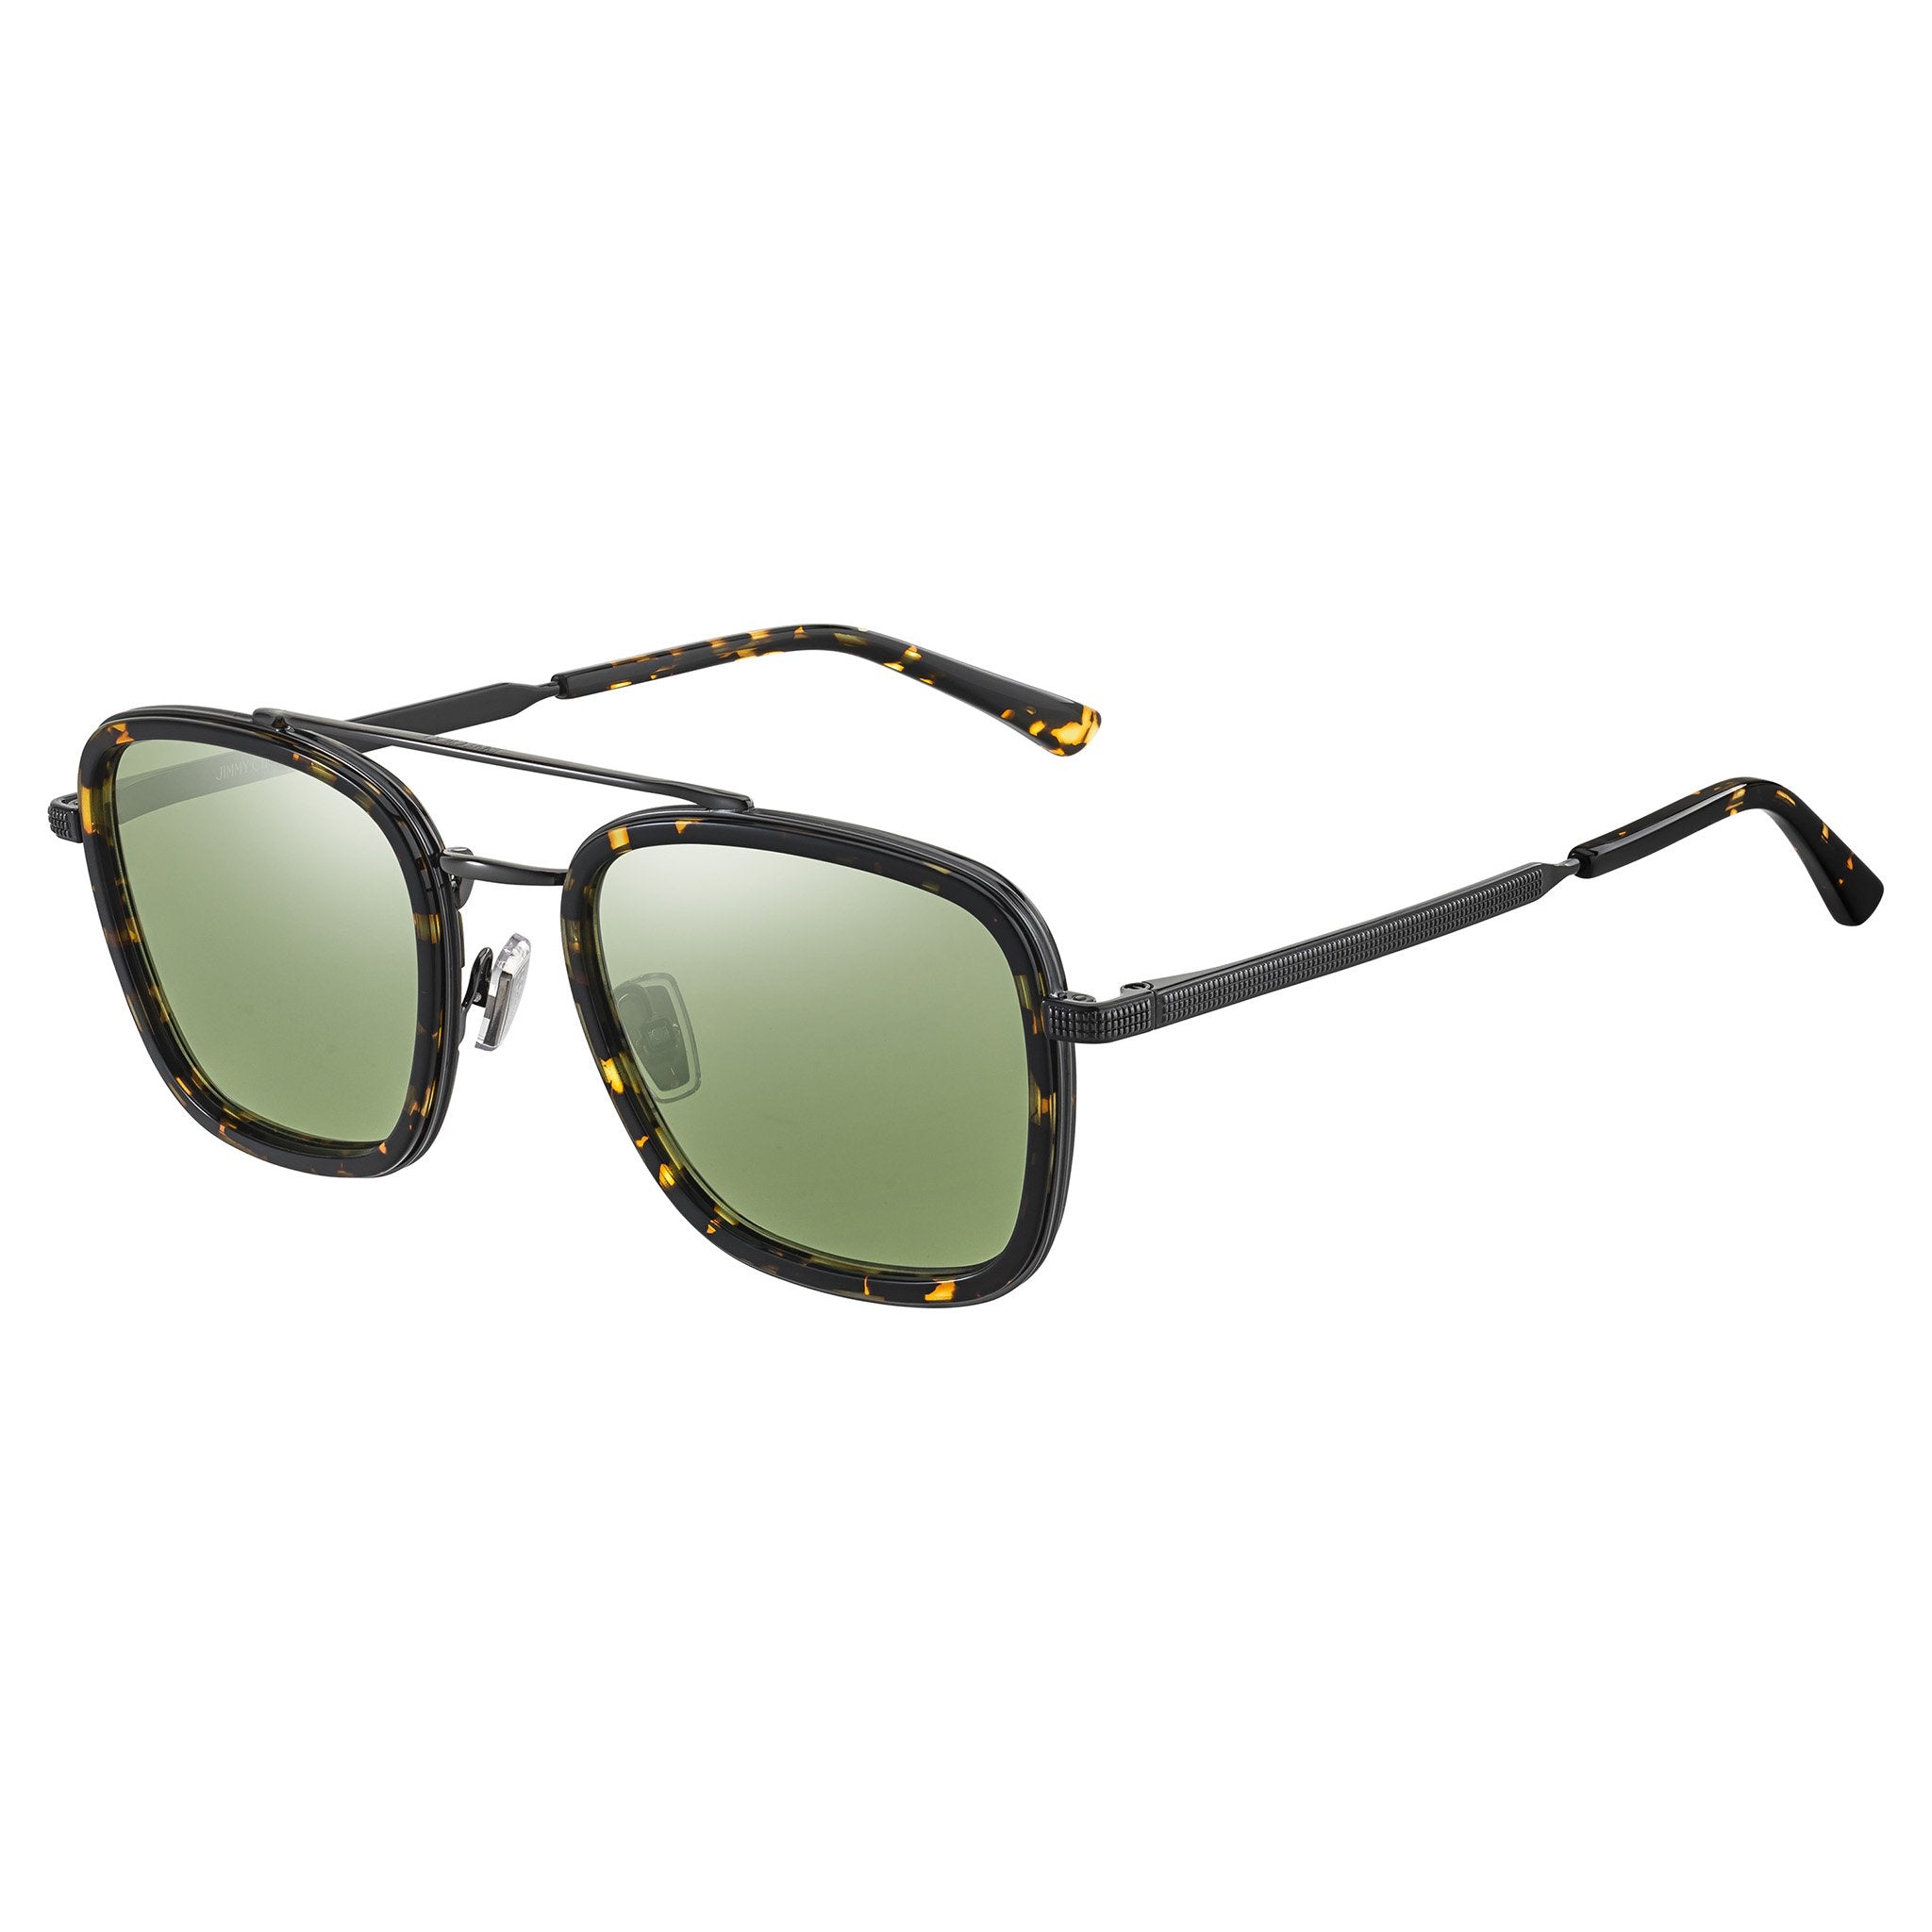 Jimmy Choo Tilda/g/s women Sunglasses online sale